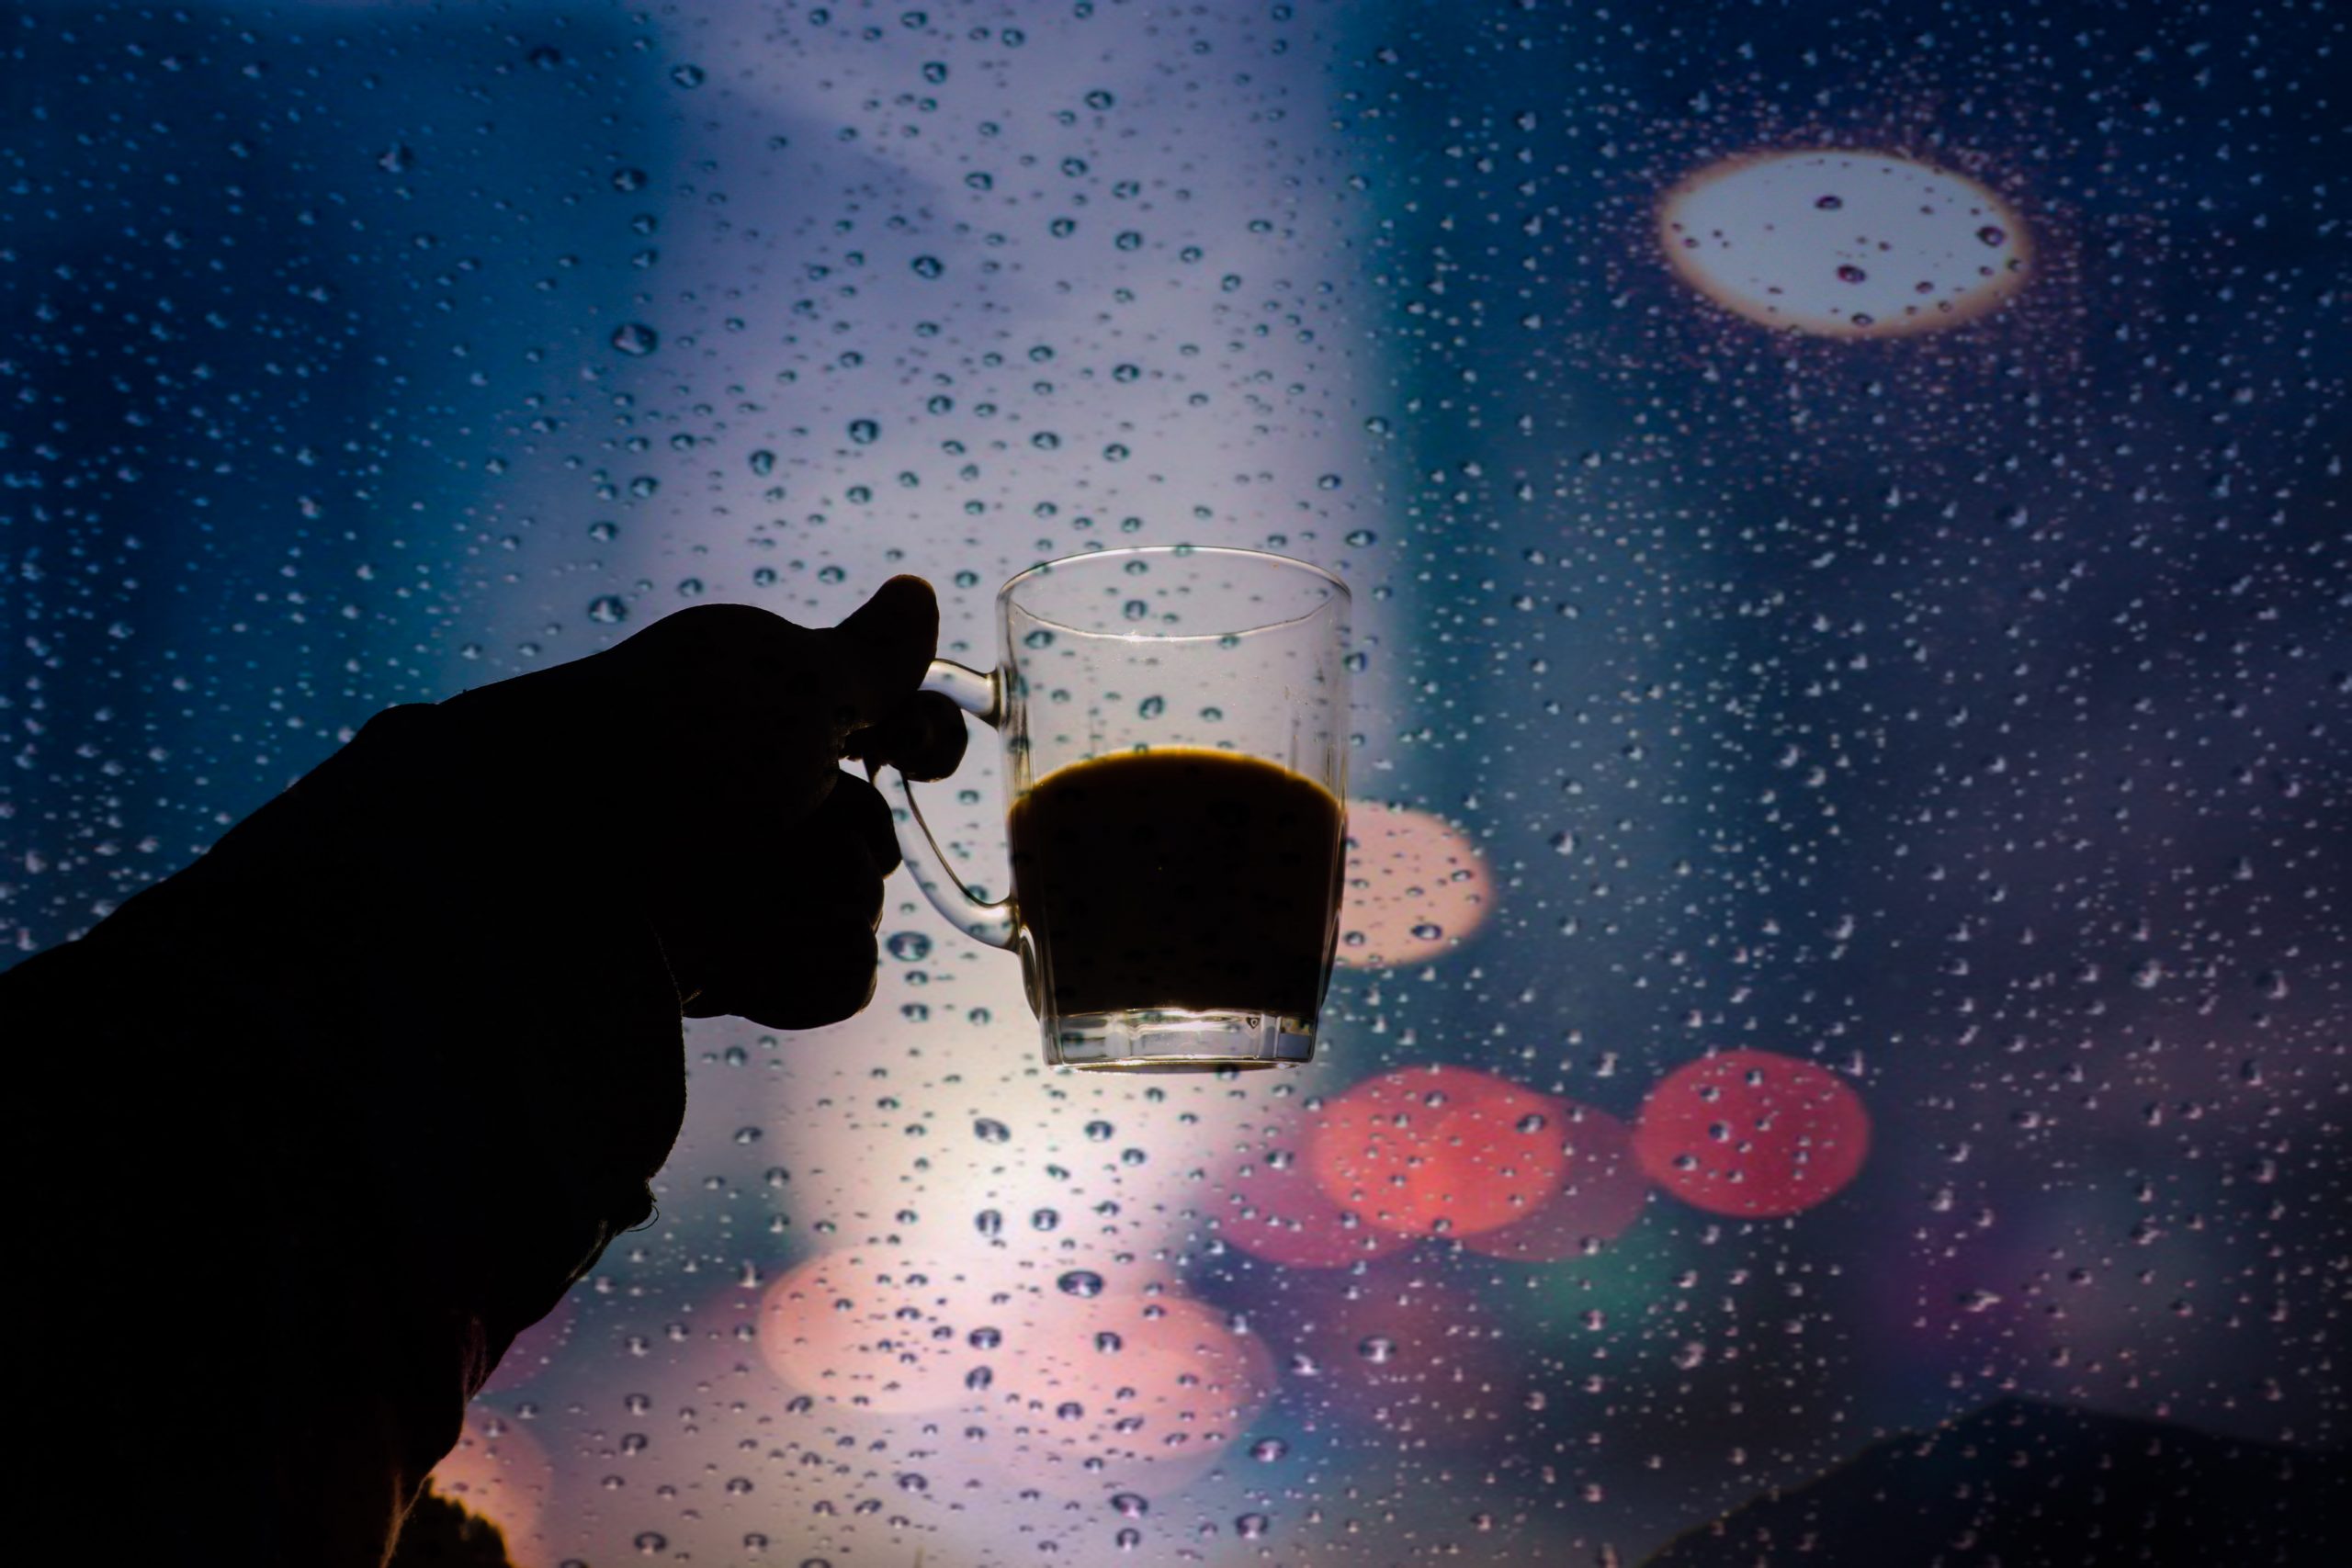 Rain drops falling on a teacup